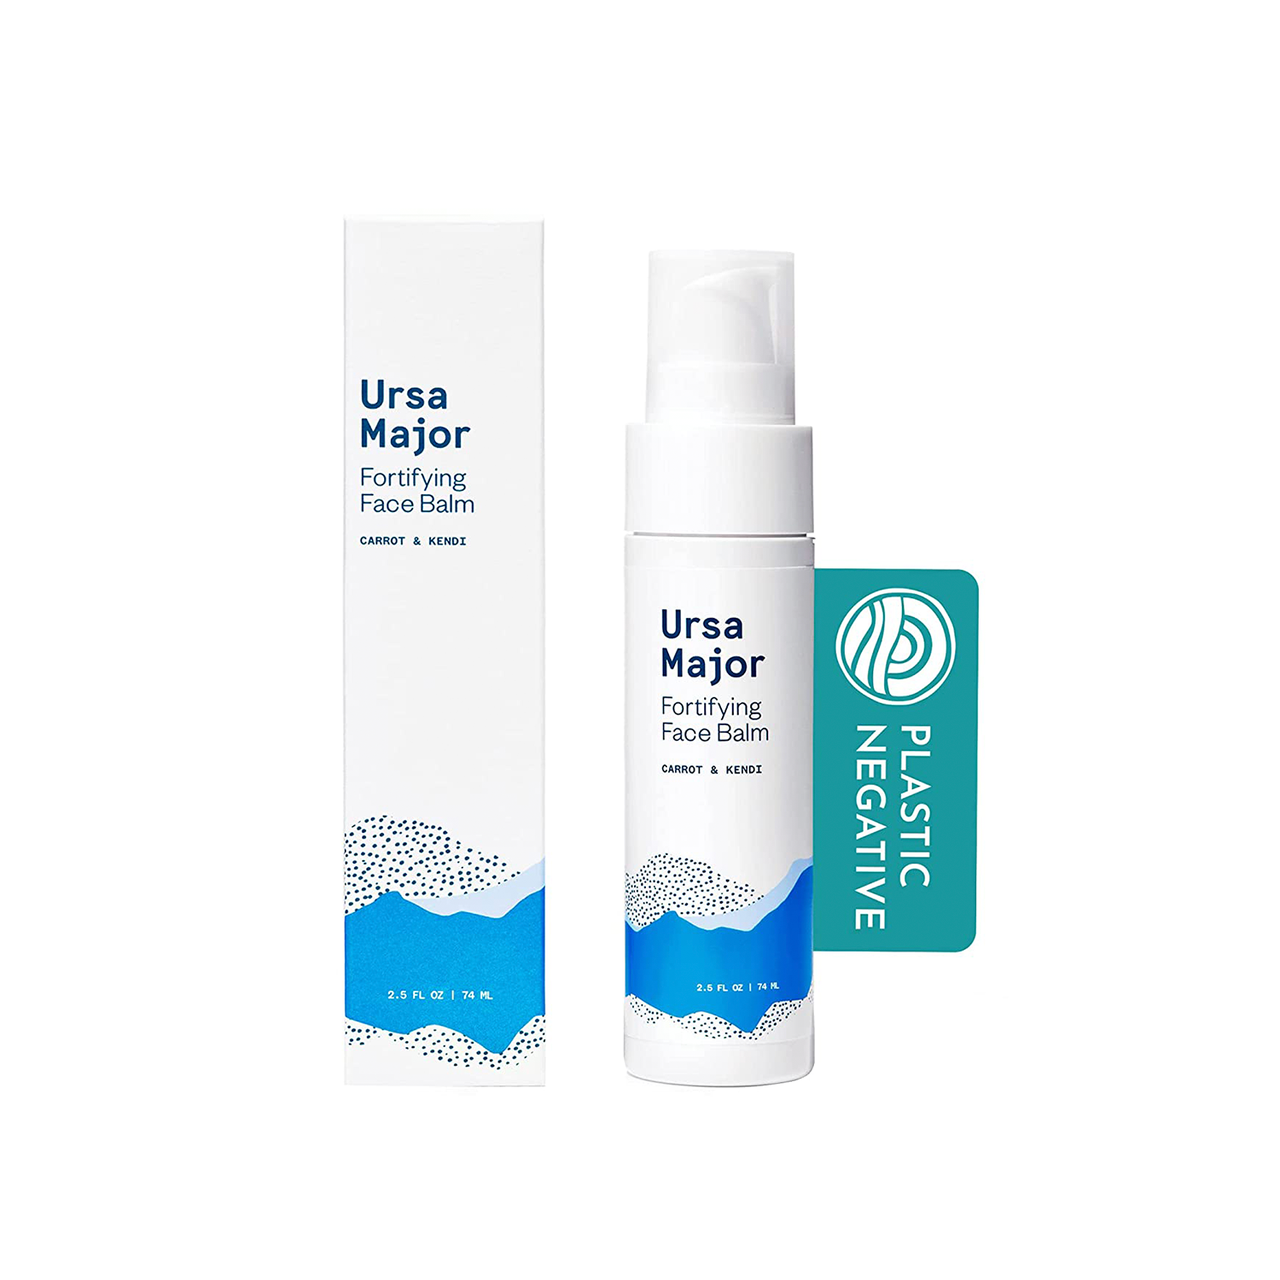 Ursa Major facial moisturizer and packaging